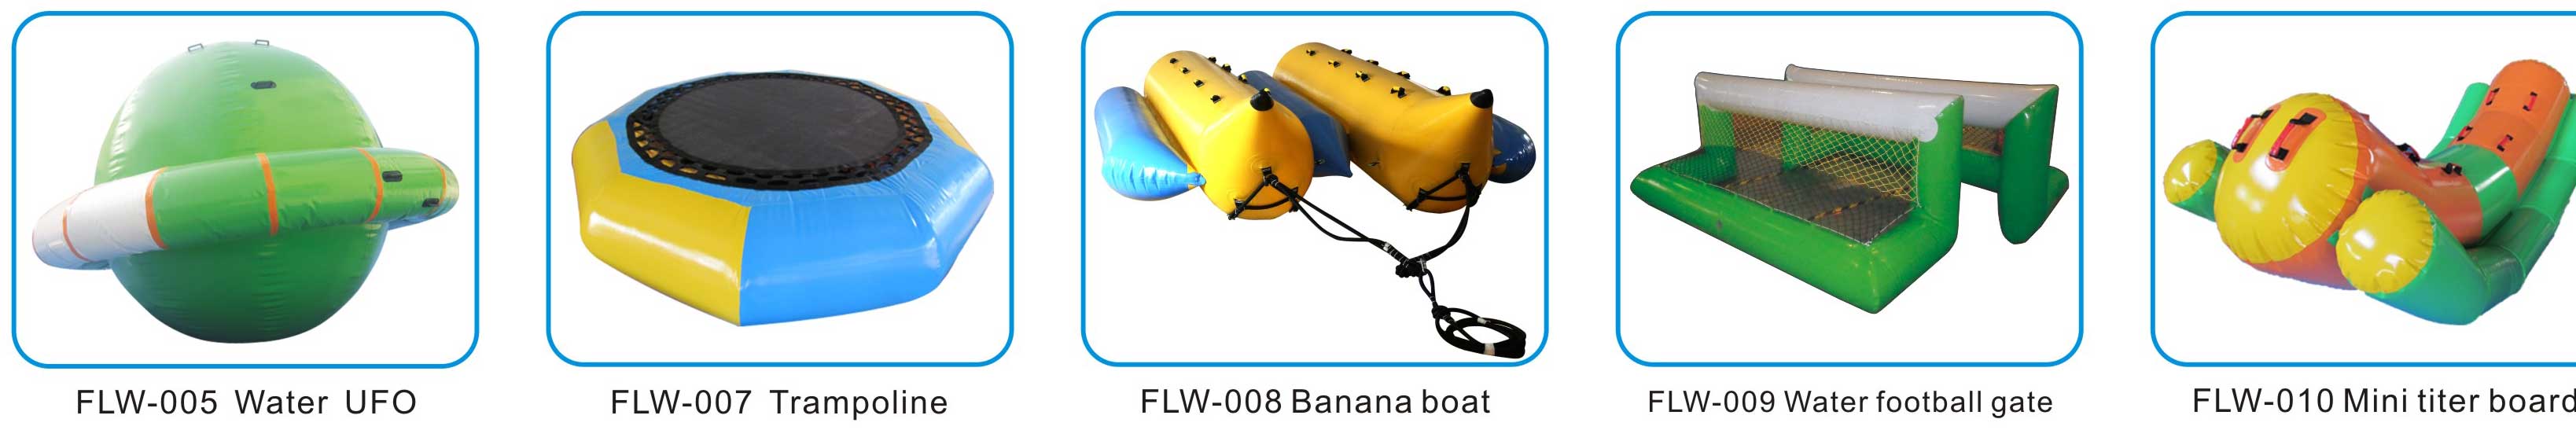 water ufo,trampoline,banana boat,water football gate,mini titer board